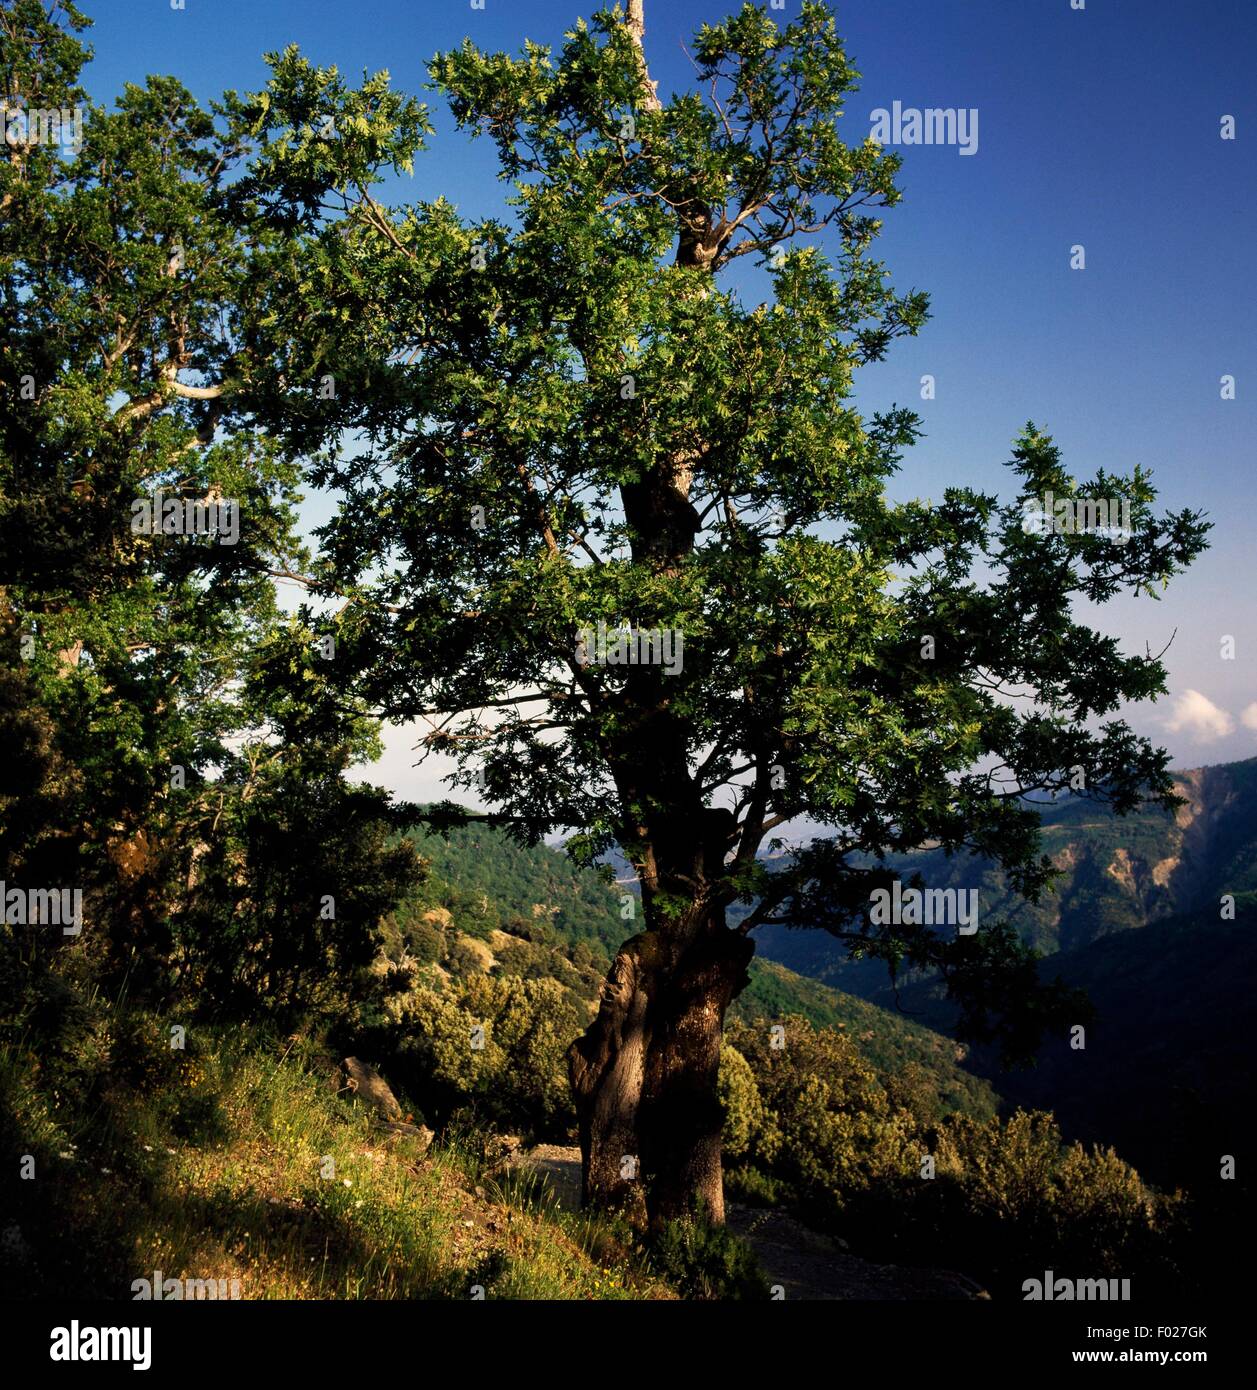 Turkey oak (Quercus cerris), Sila National Park, Calabria, Italy. Stock Photo